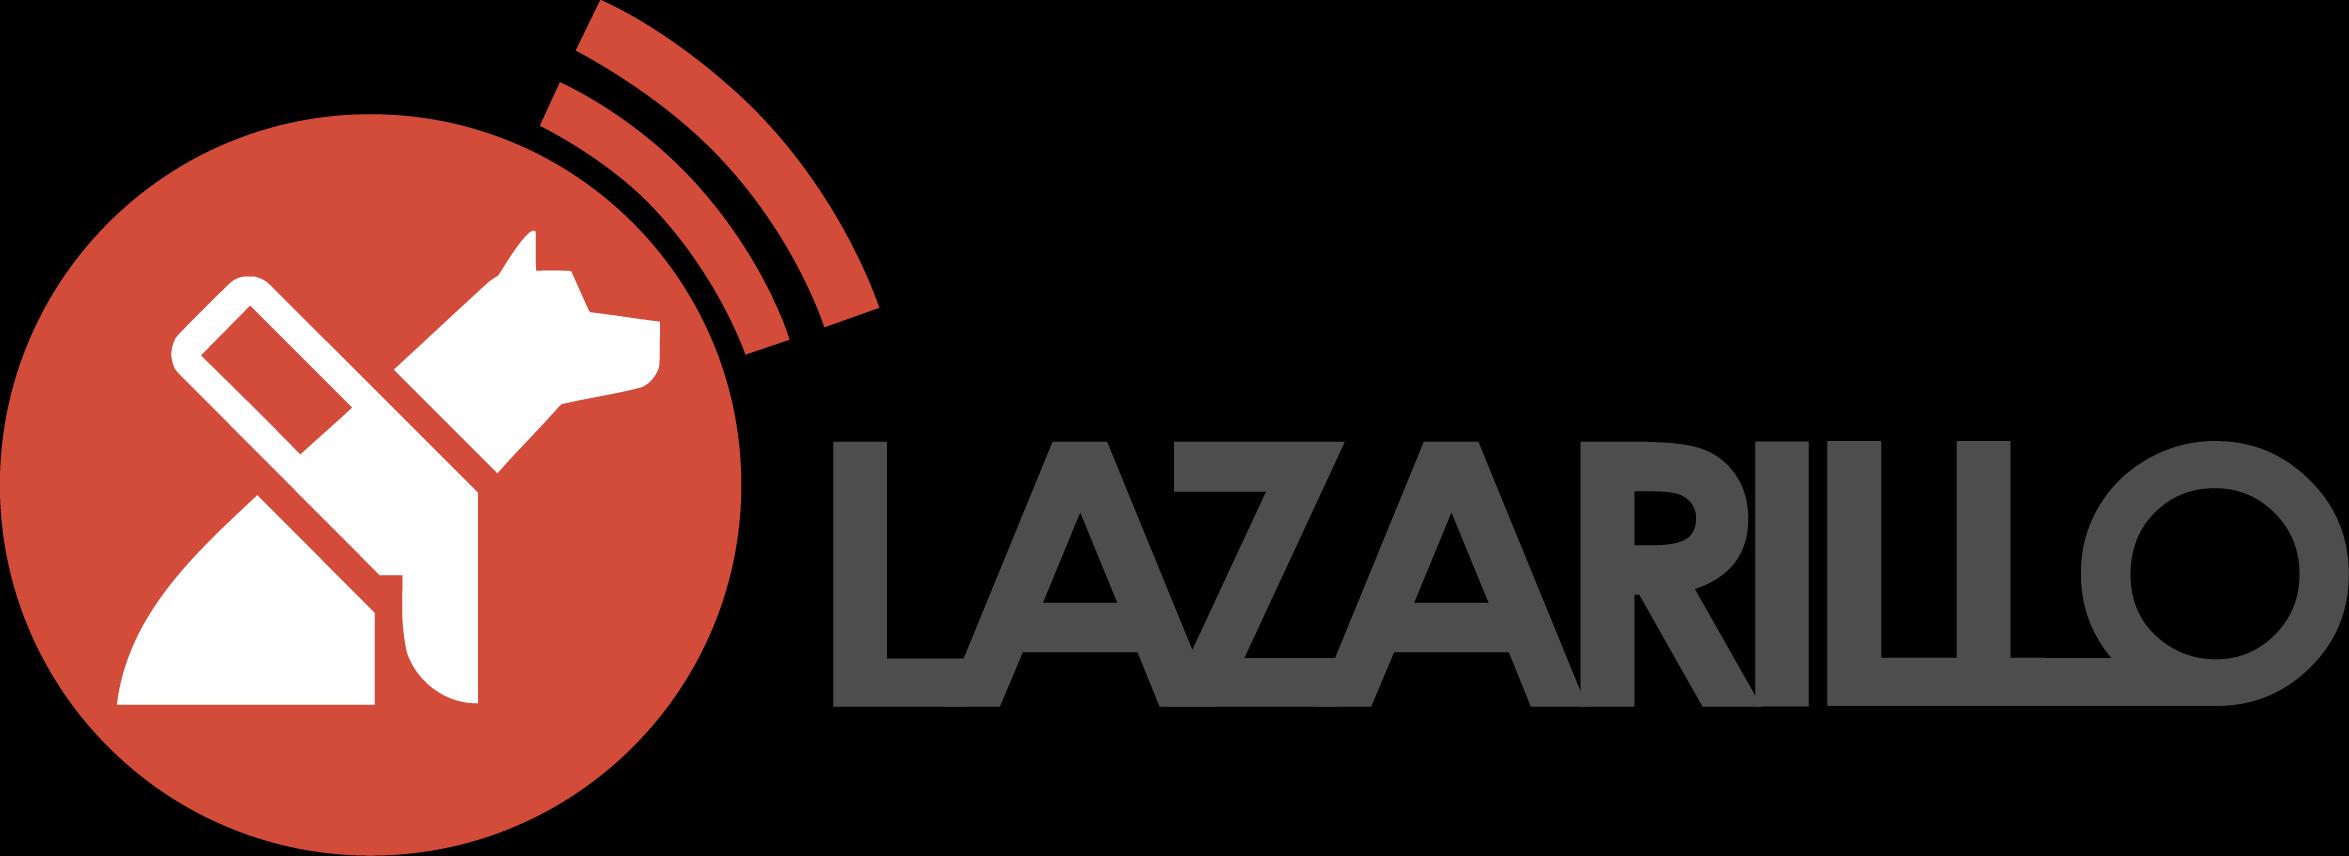 Lazarillo_logo